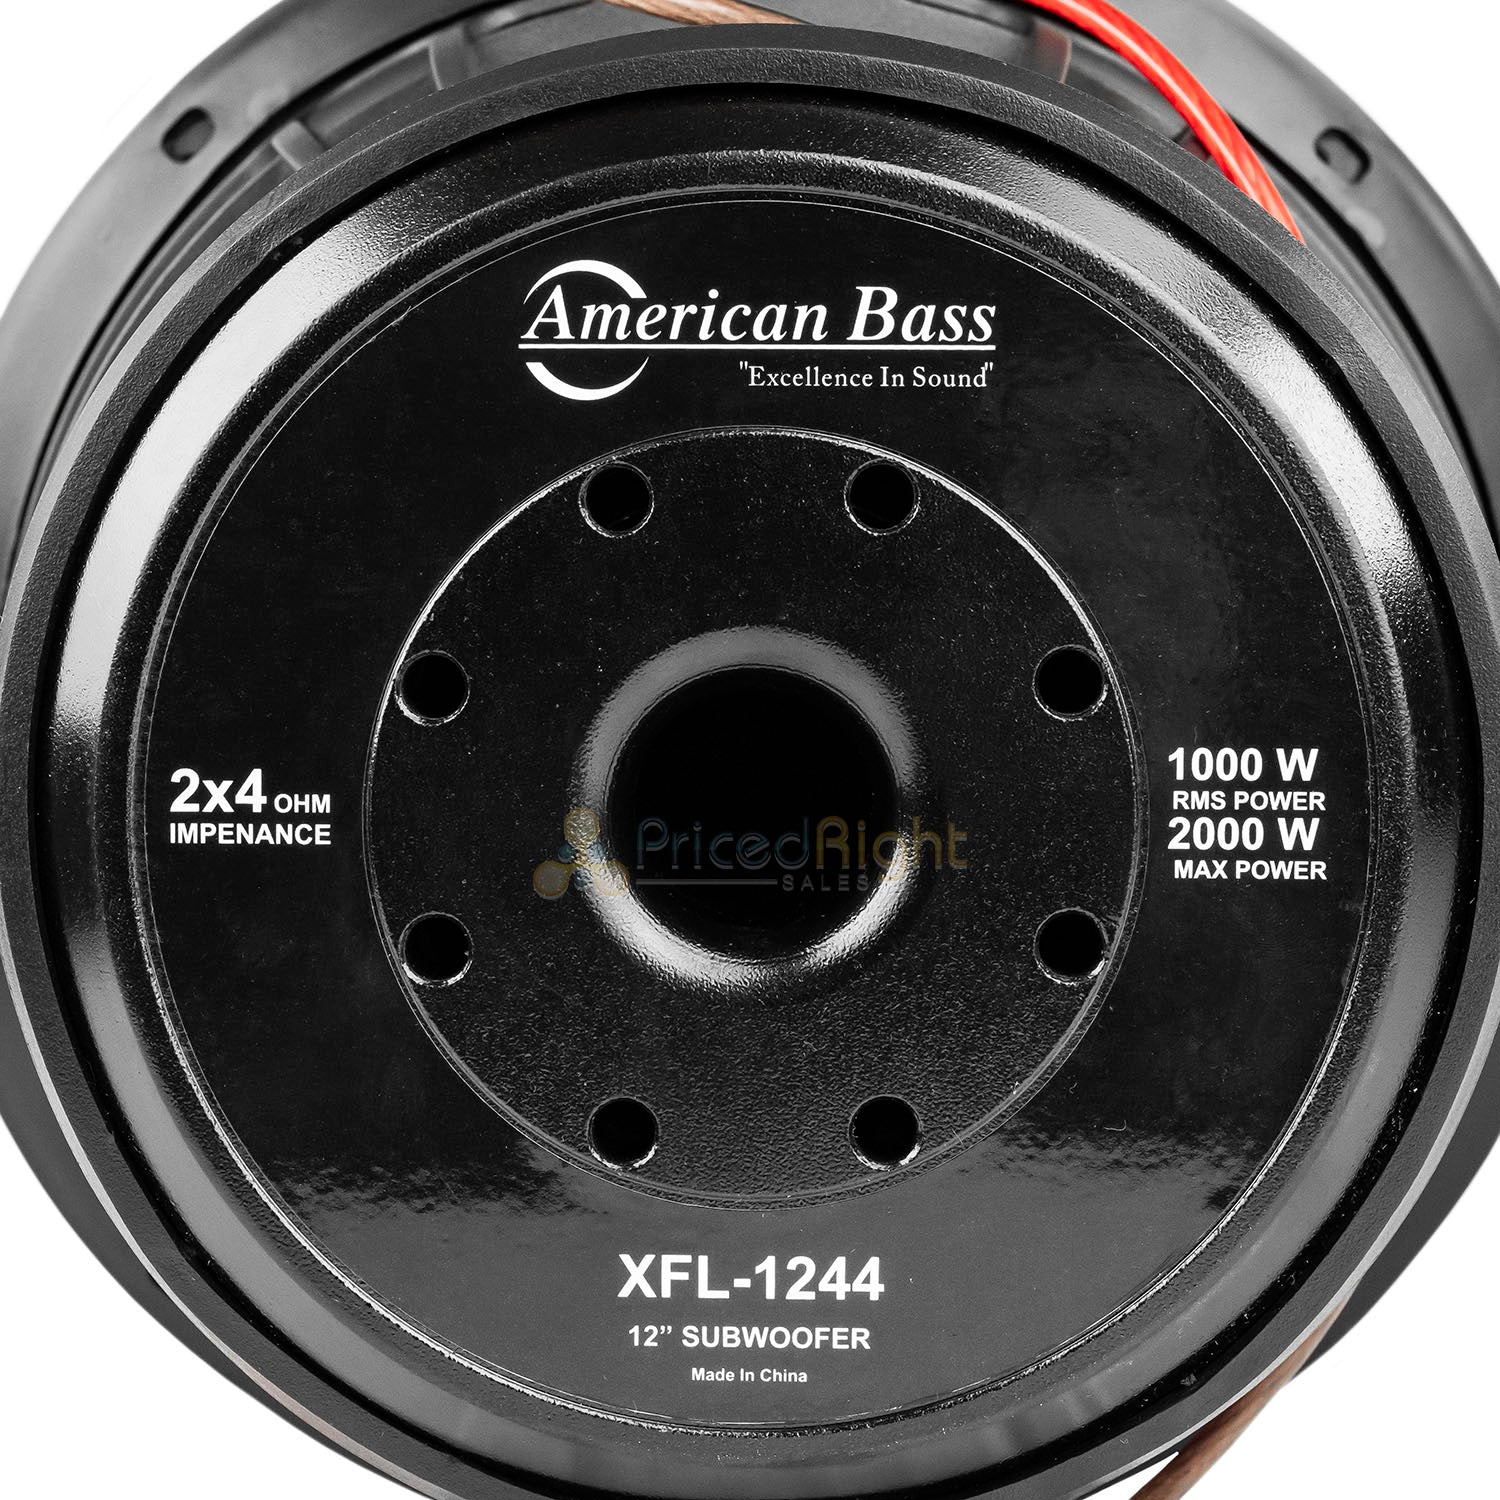 American Bass XFL-1244 12" Subwoofers Dual 4 Ohm 2000 Watts Max Car Audio 2 Pack